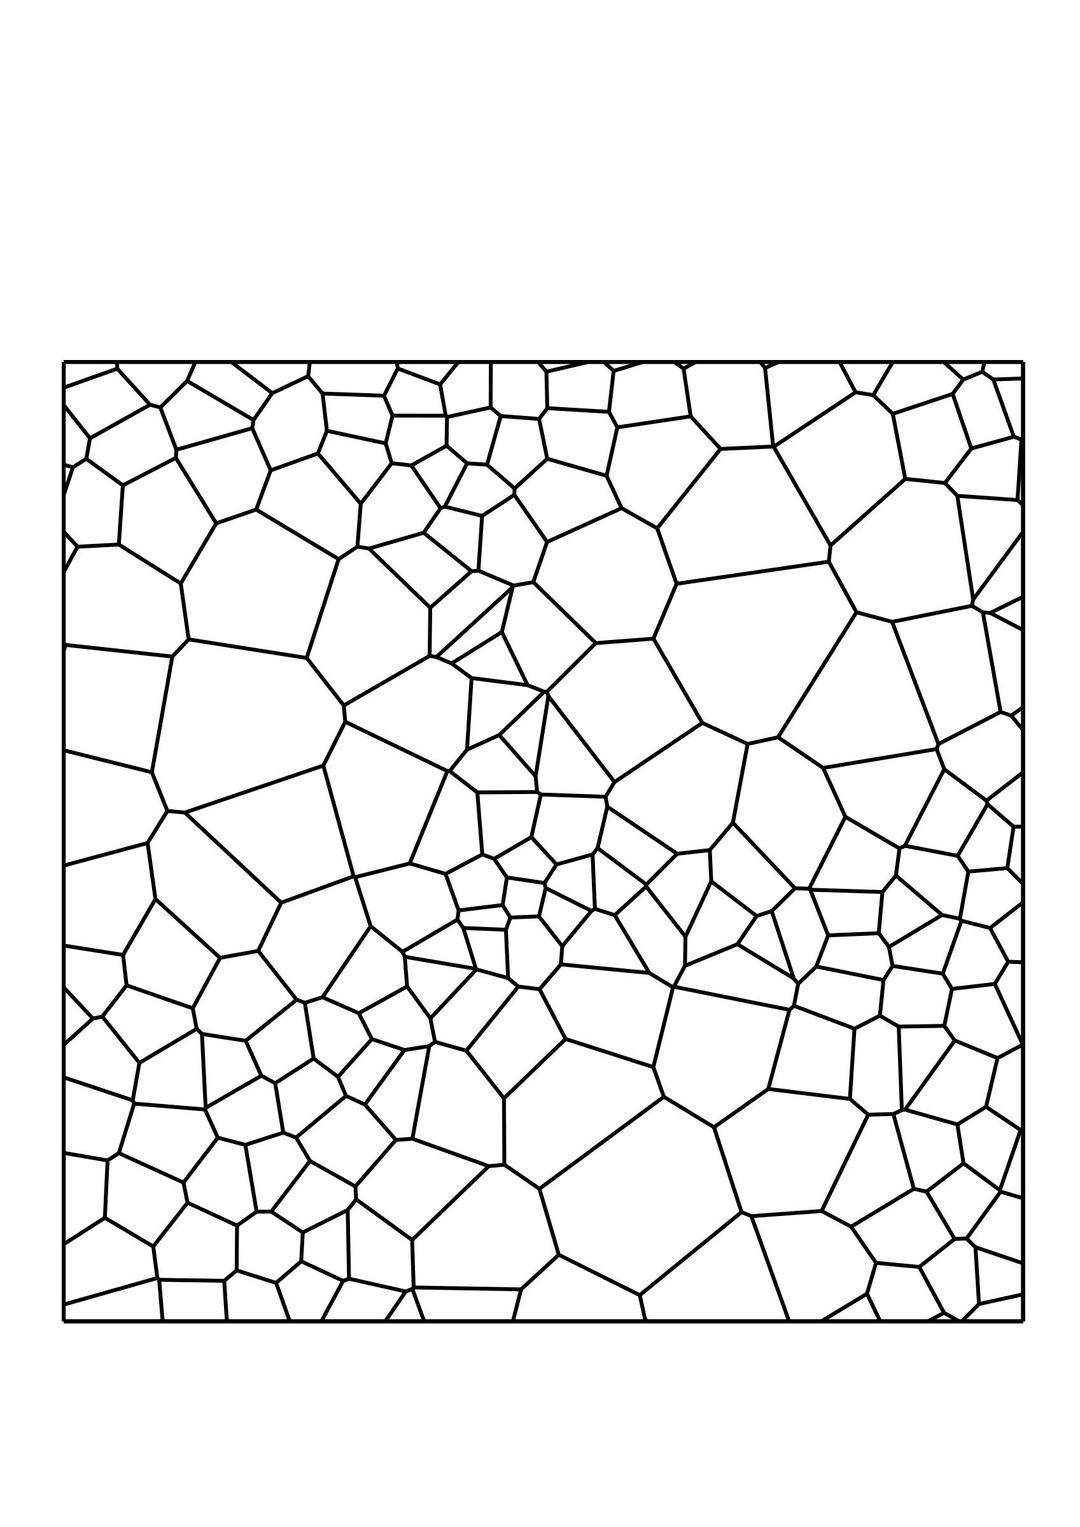 Voronoi diagram with 3 attractor points png transparent